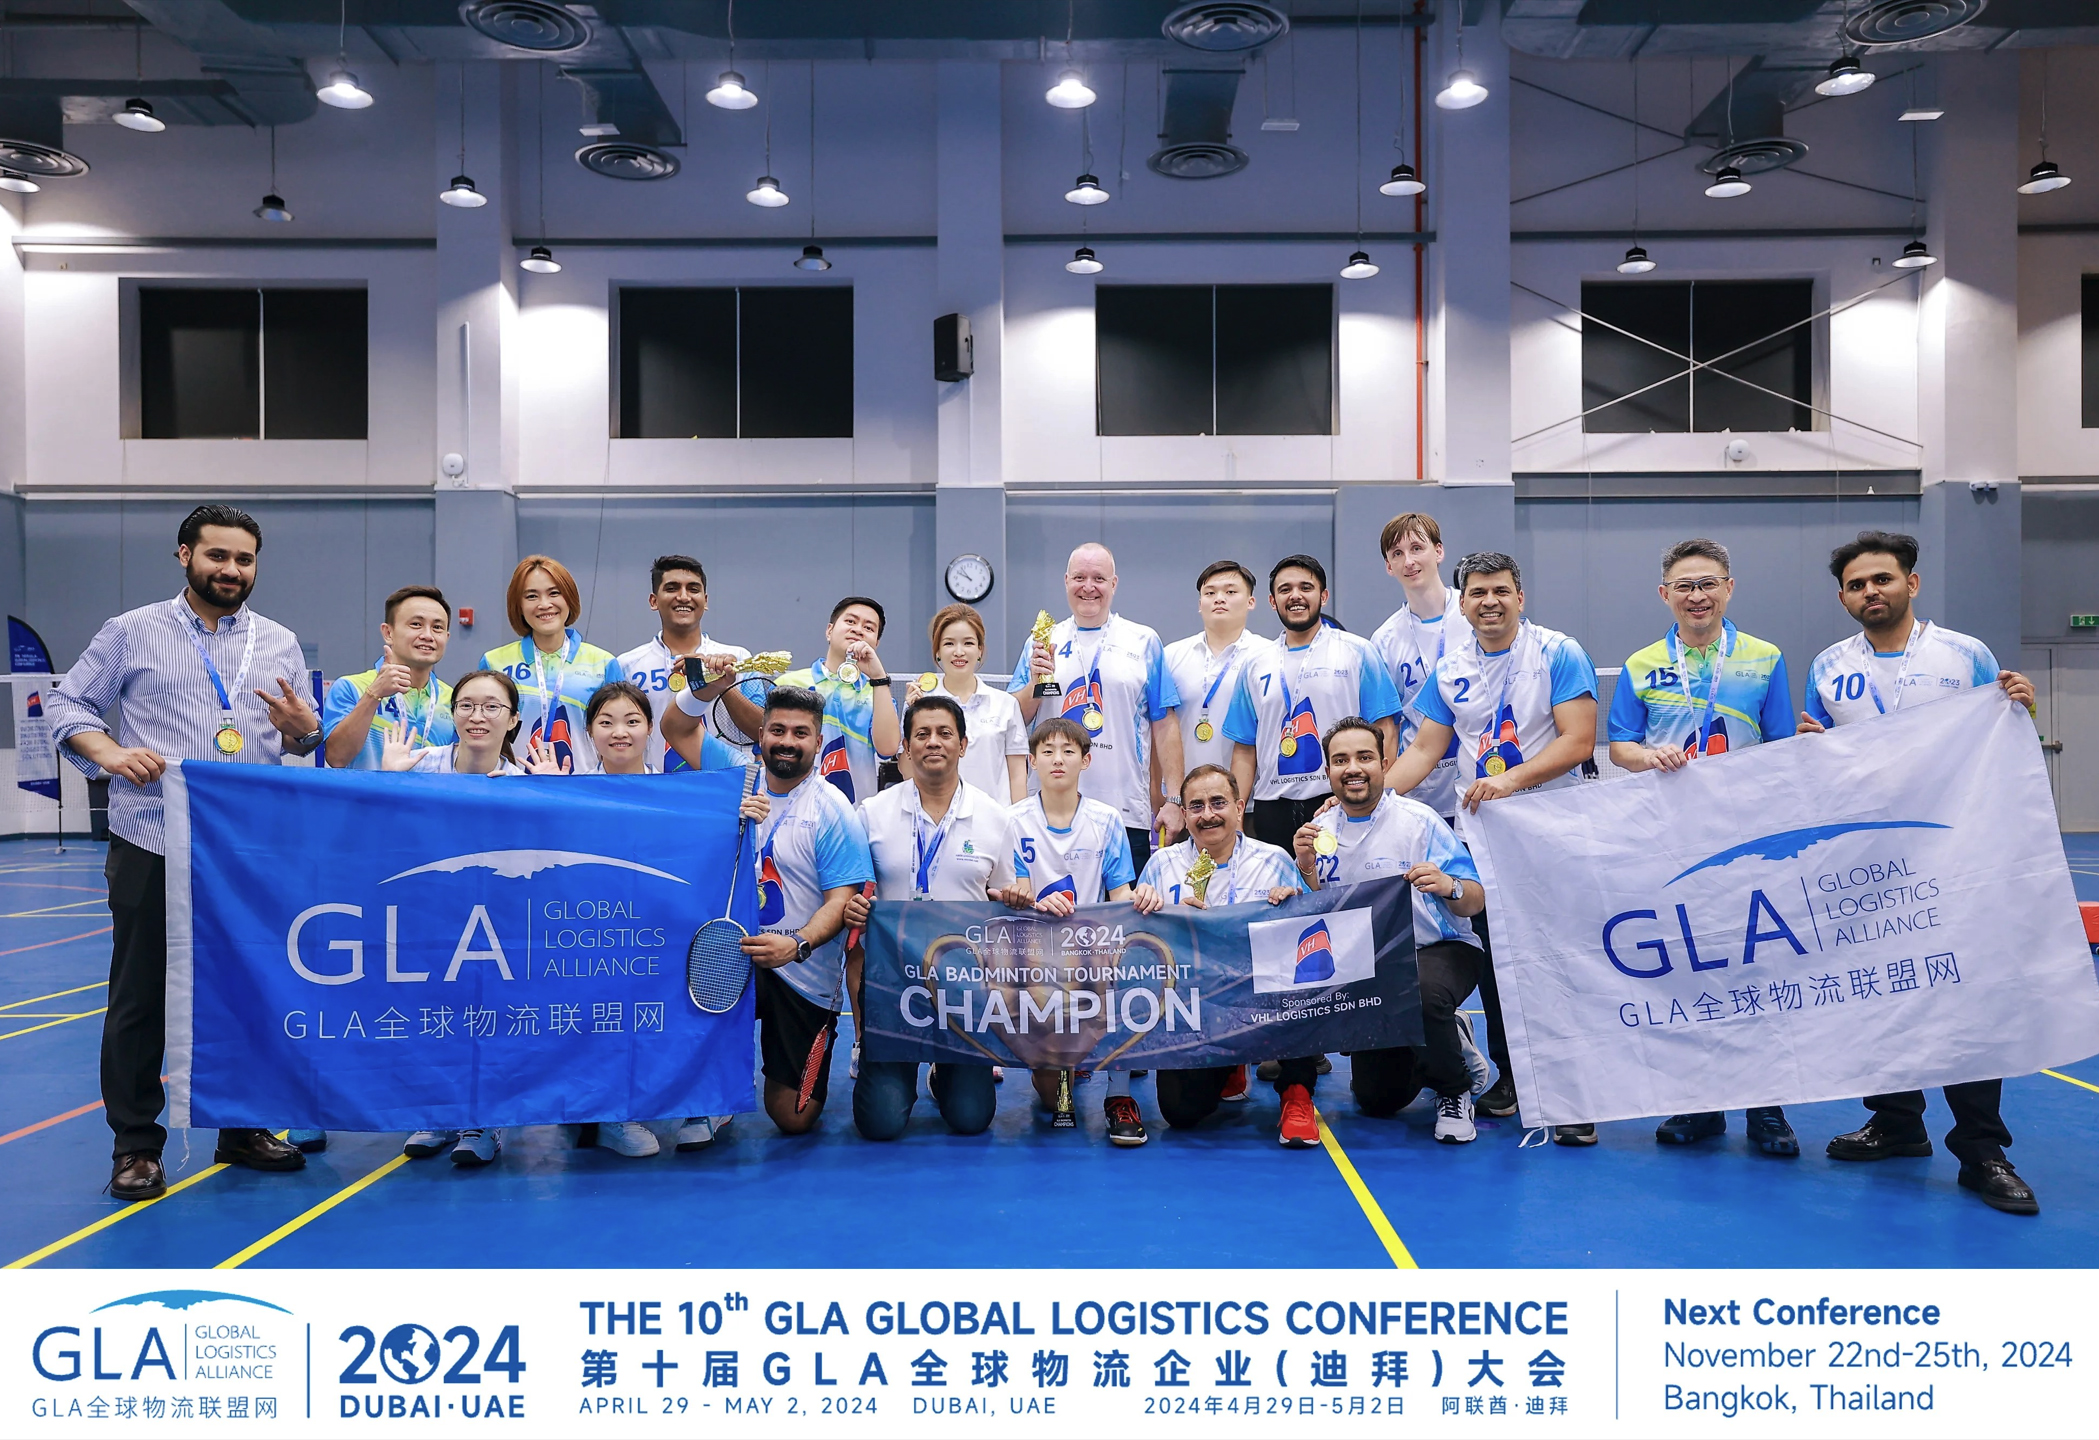 VHL Logistics sponsors badminton tournament organised by GLA Global Logistics Conference